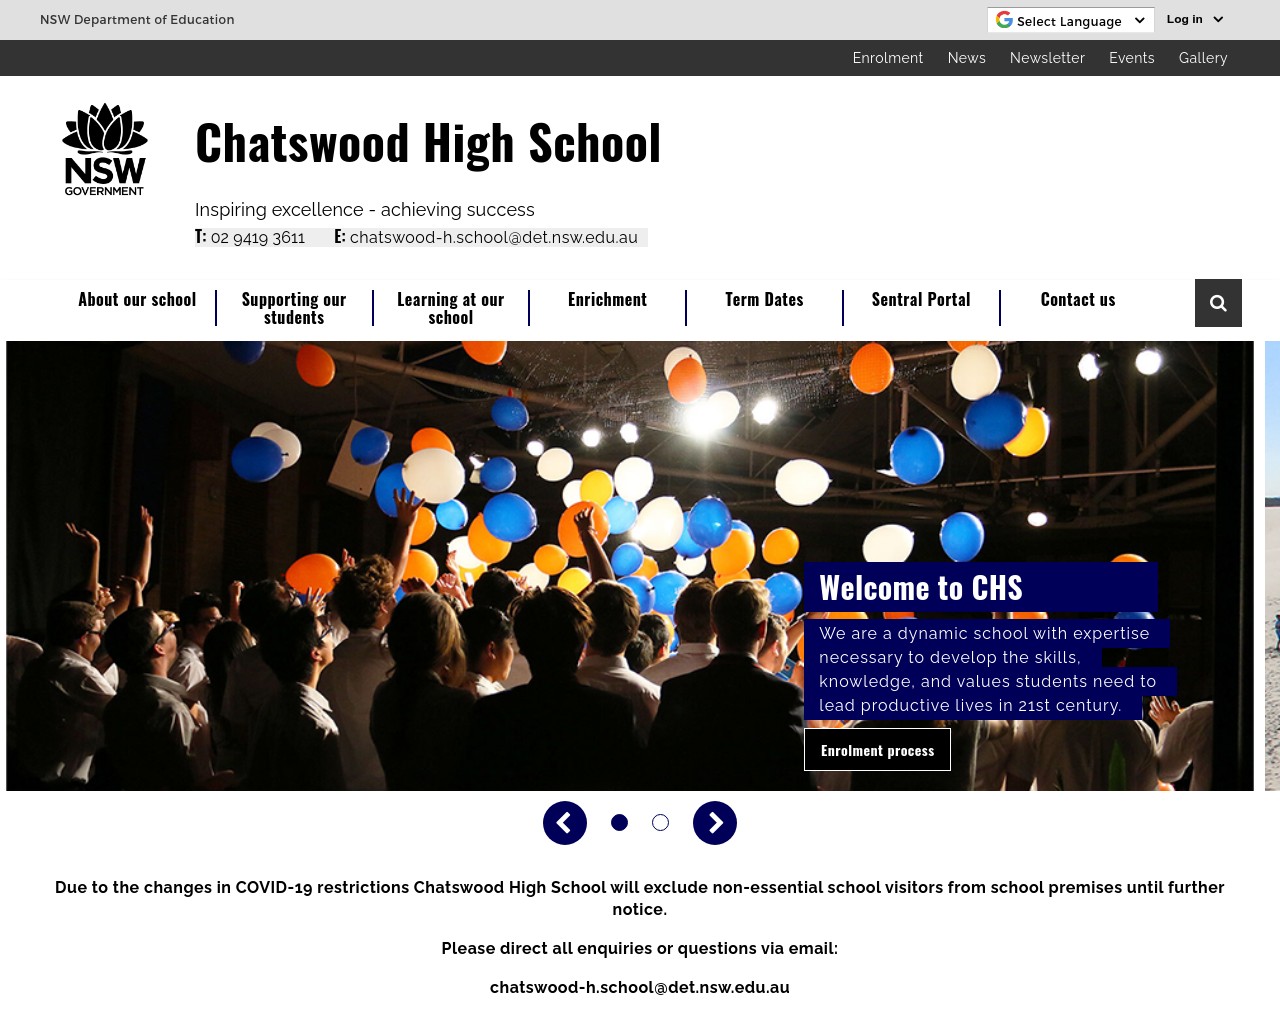 Chatswood High School